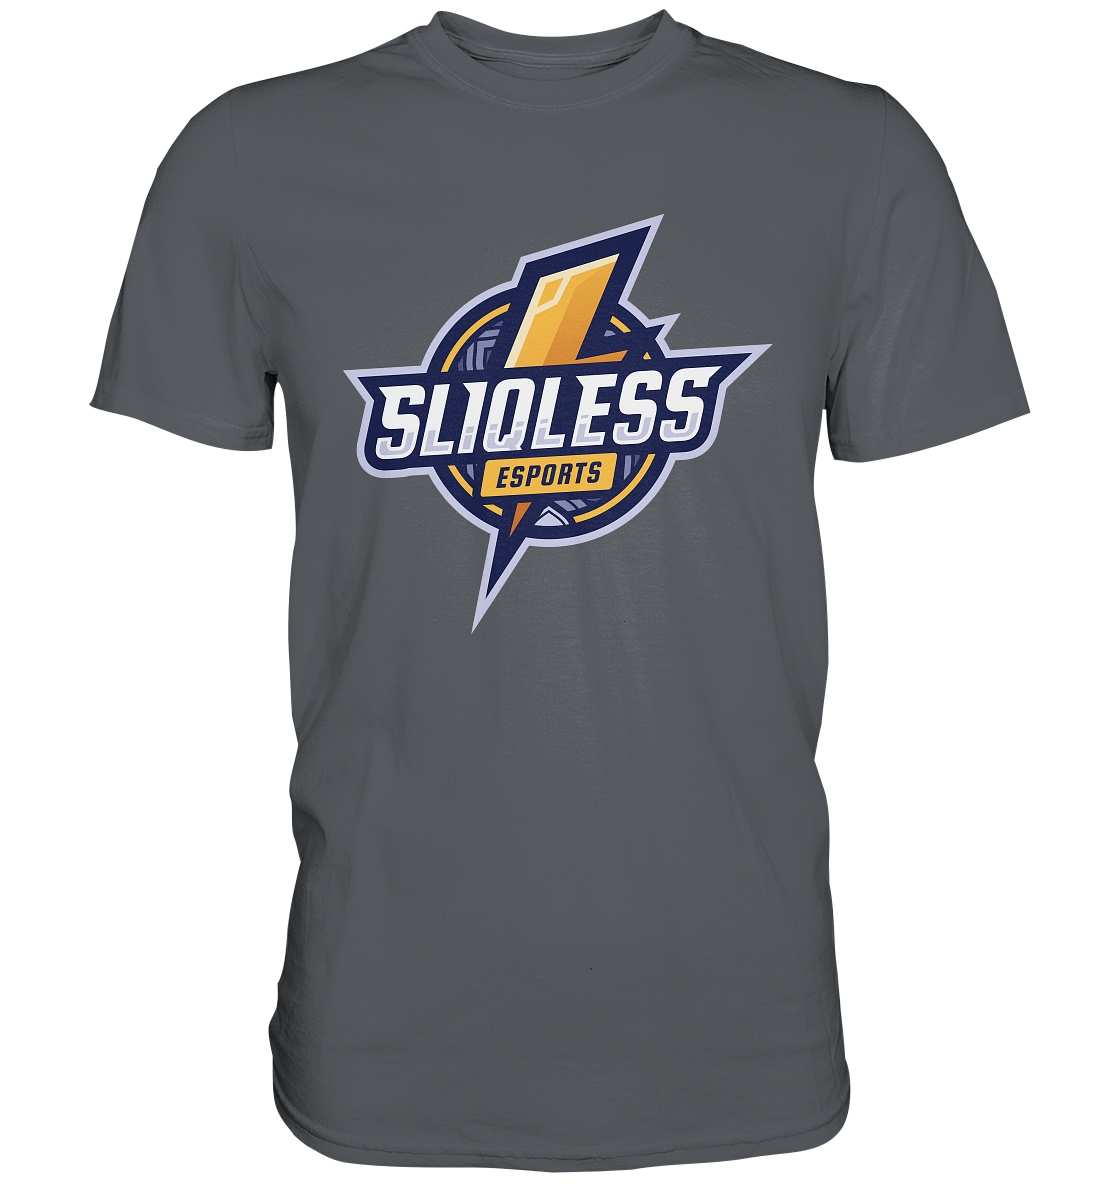 SLIQLESS ESPORTS - Basic Shirt